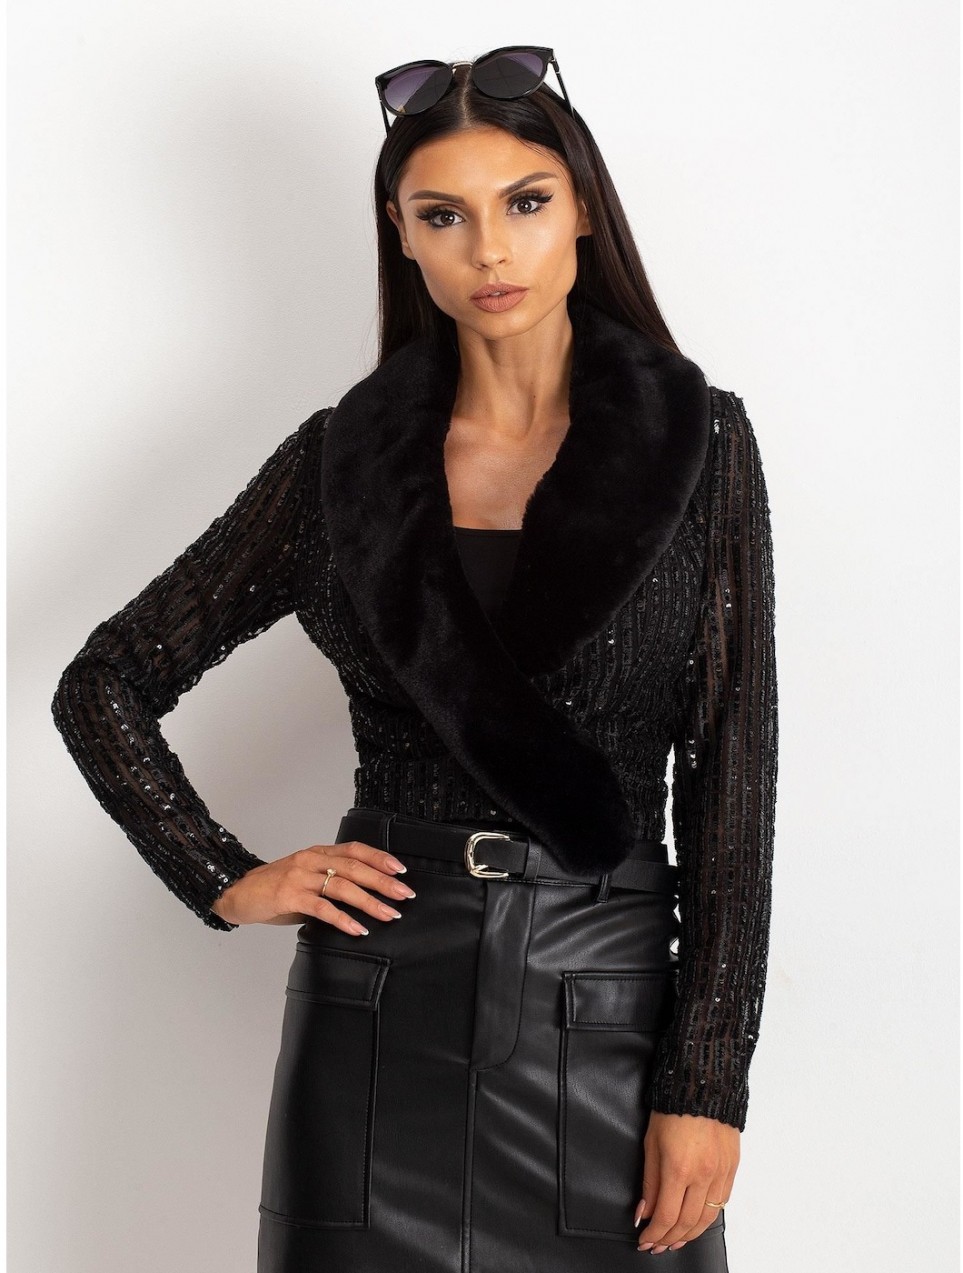 Black jacket with sequins